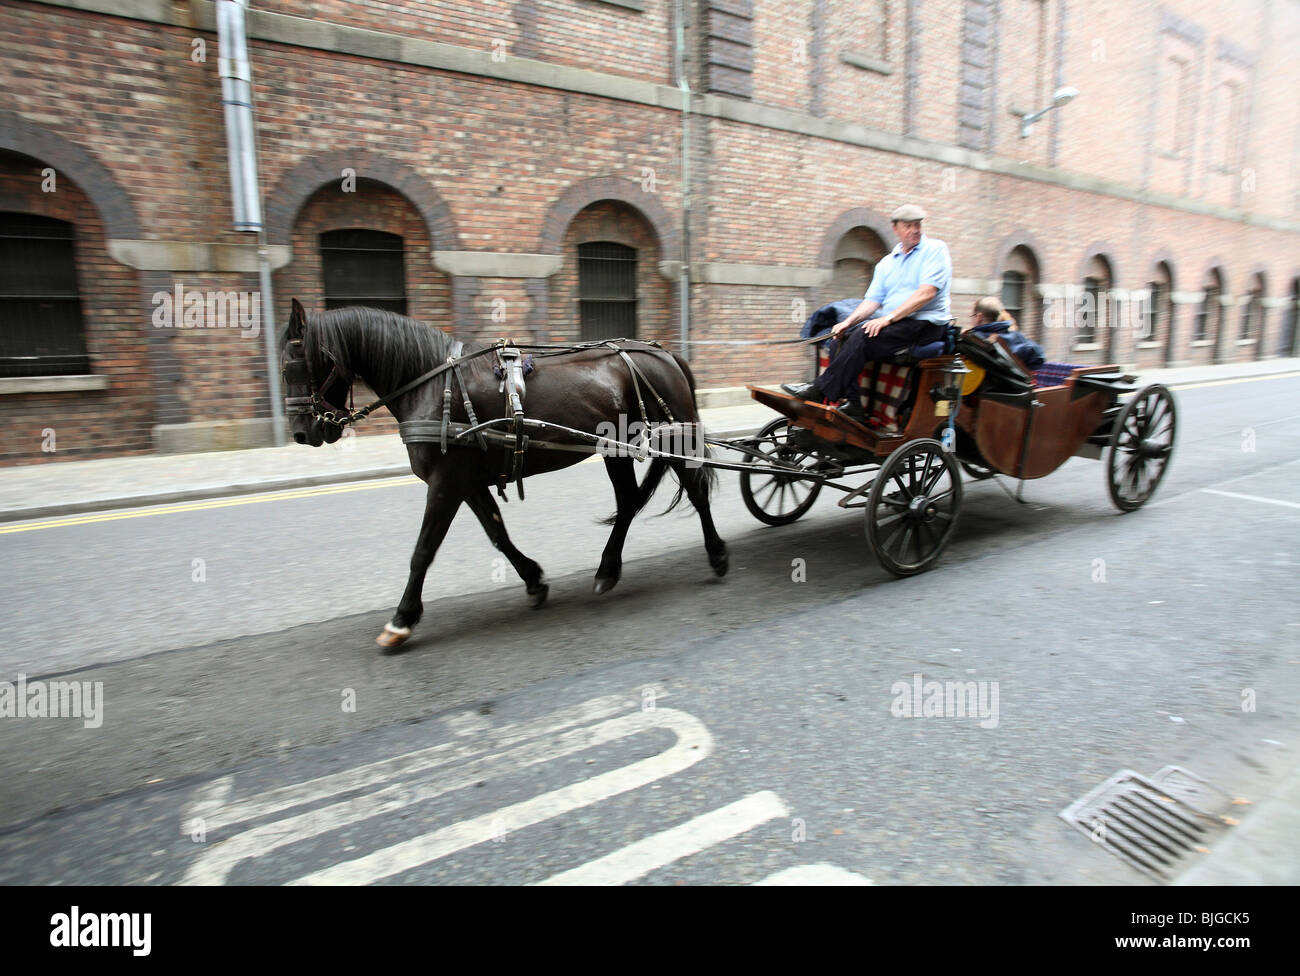 Horse carriage in a street, Dublin, Ireland Stock Photo